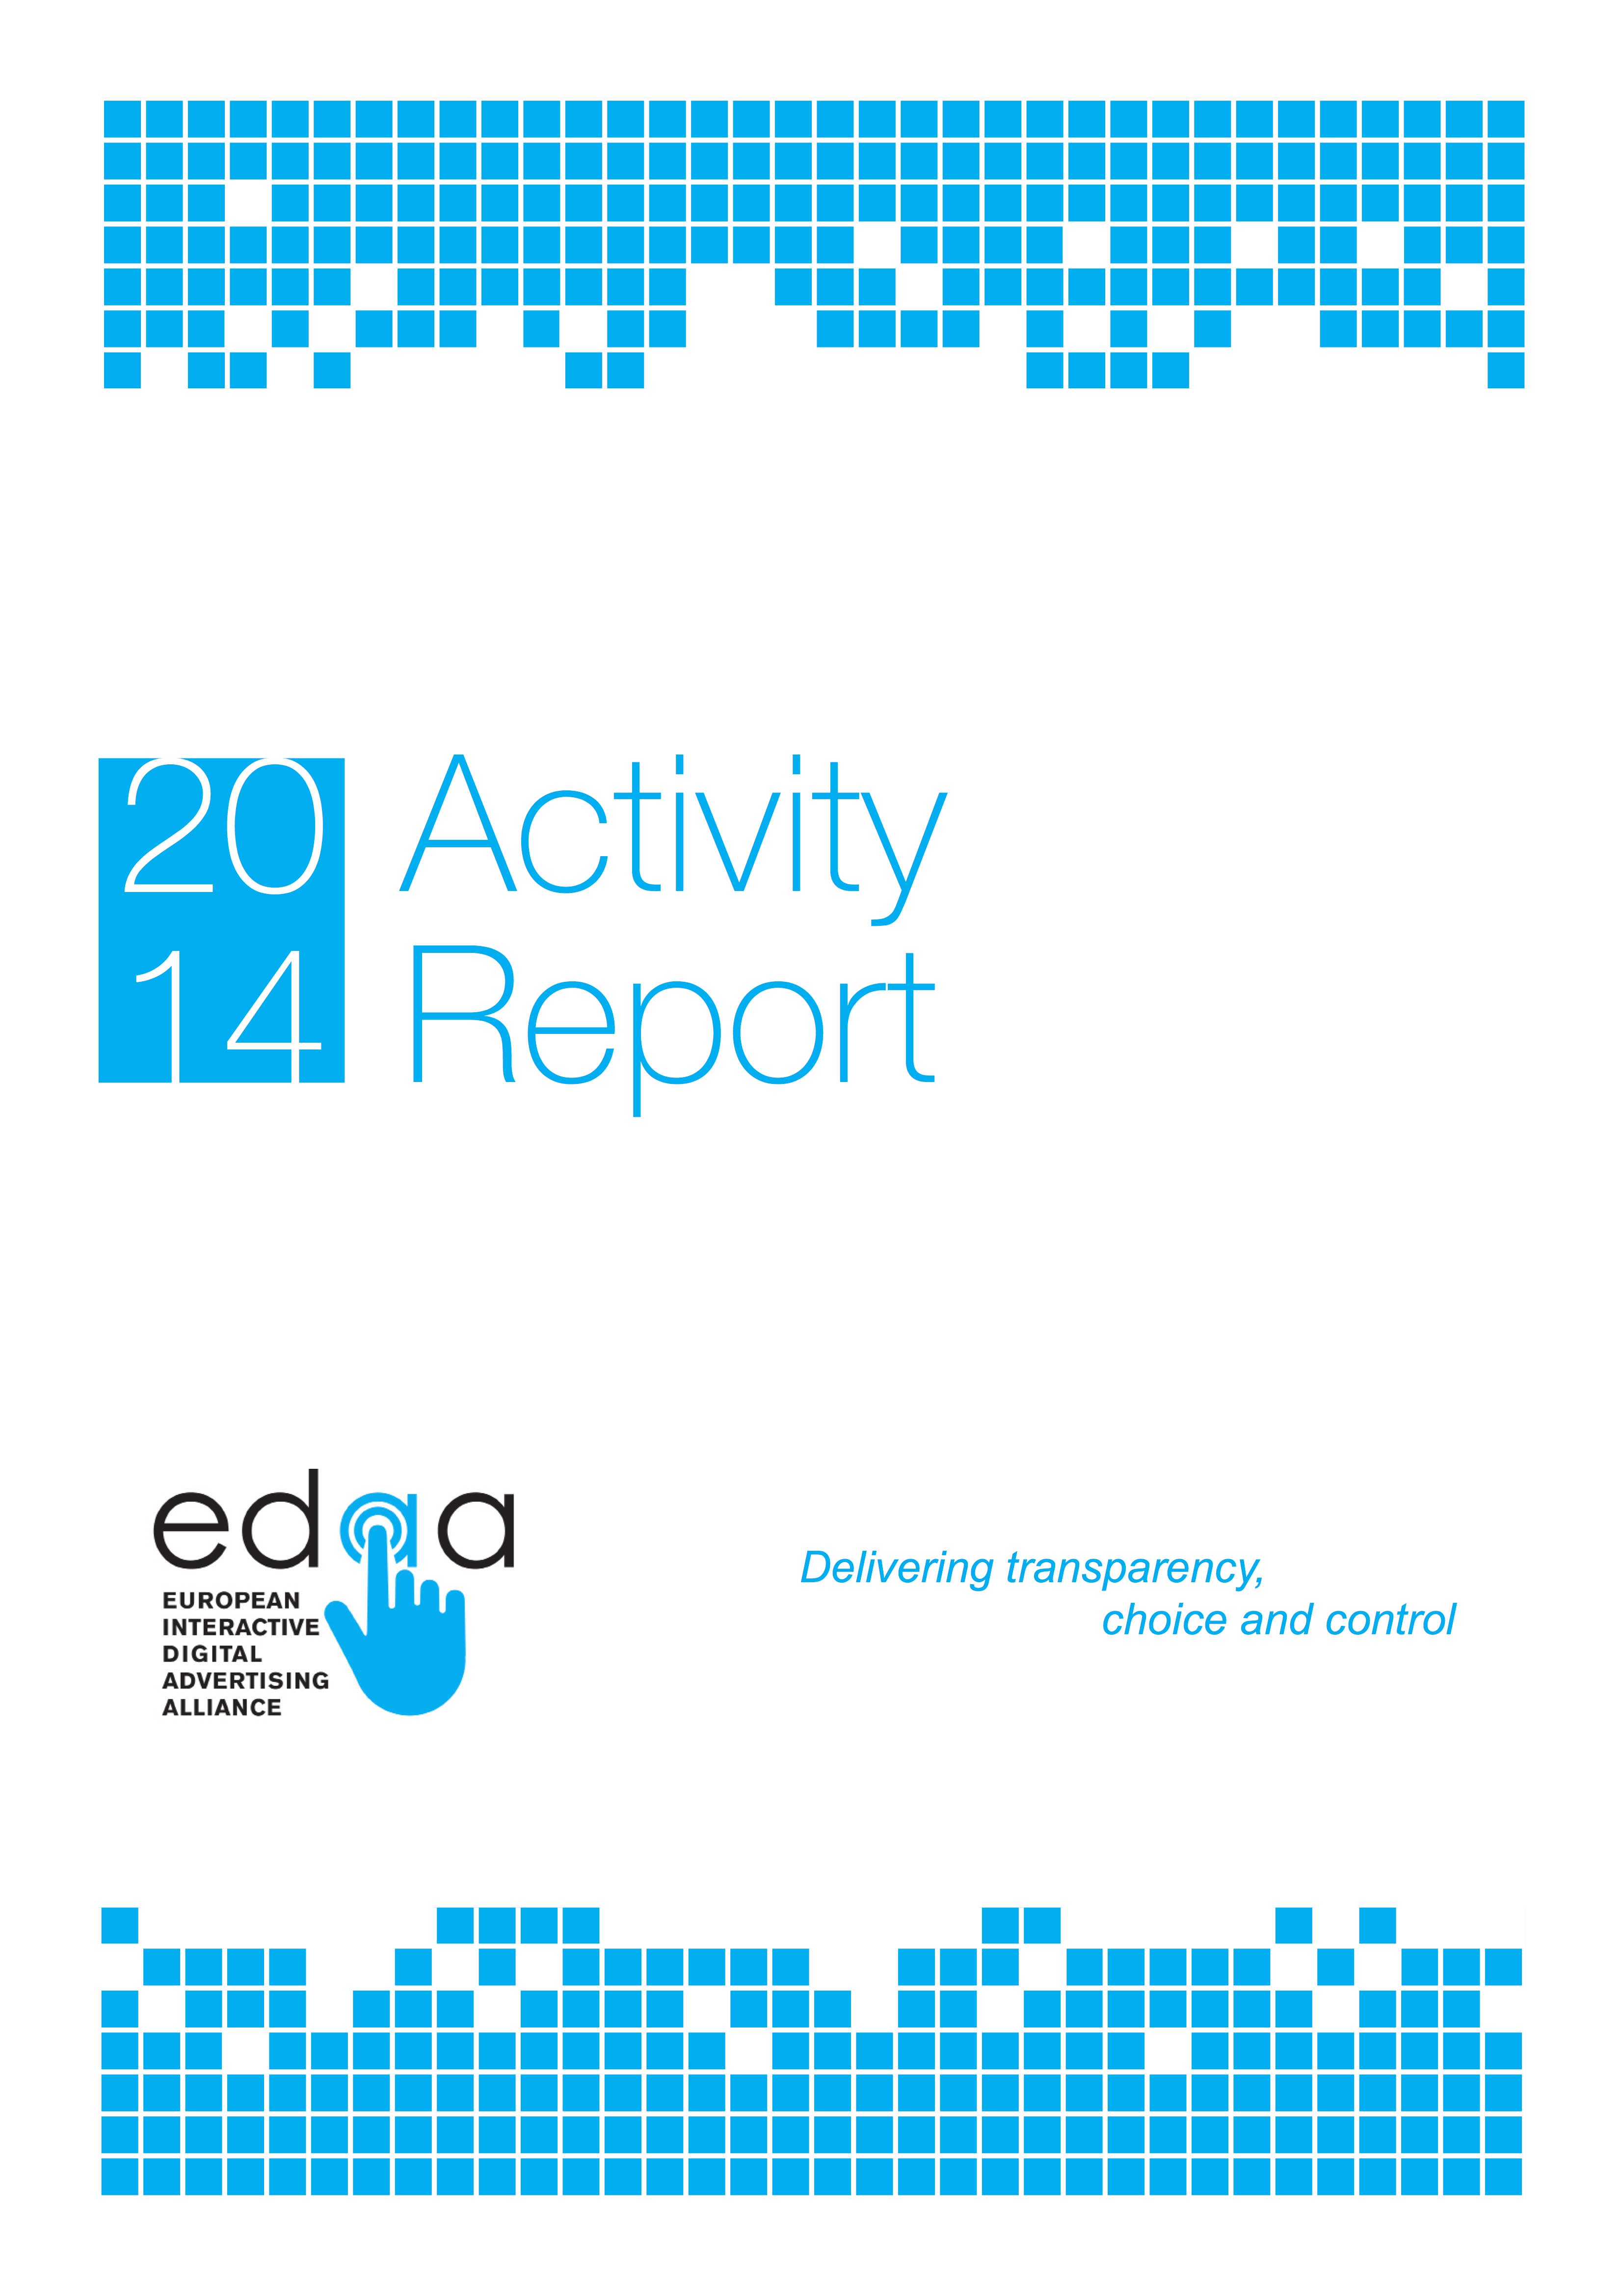 EDAA First Year Activity Report